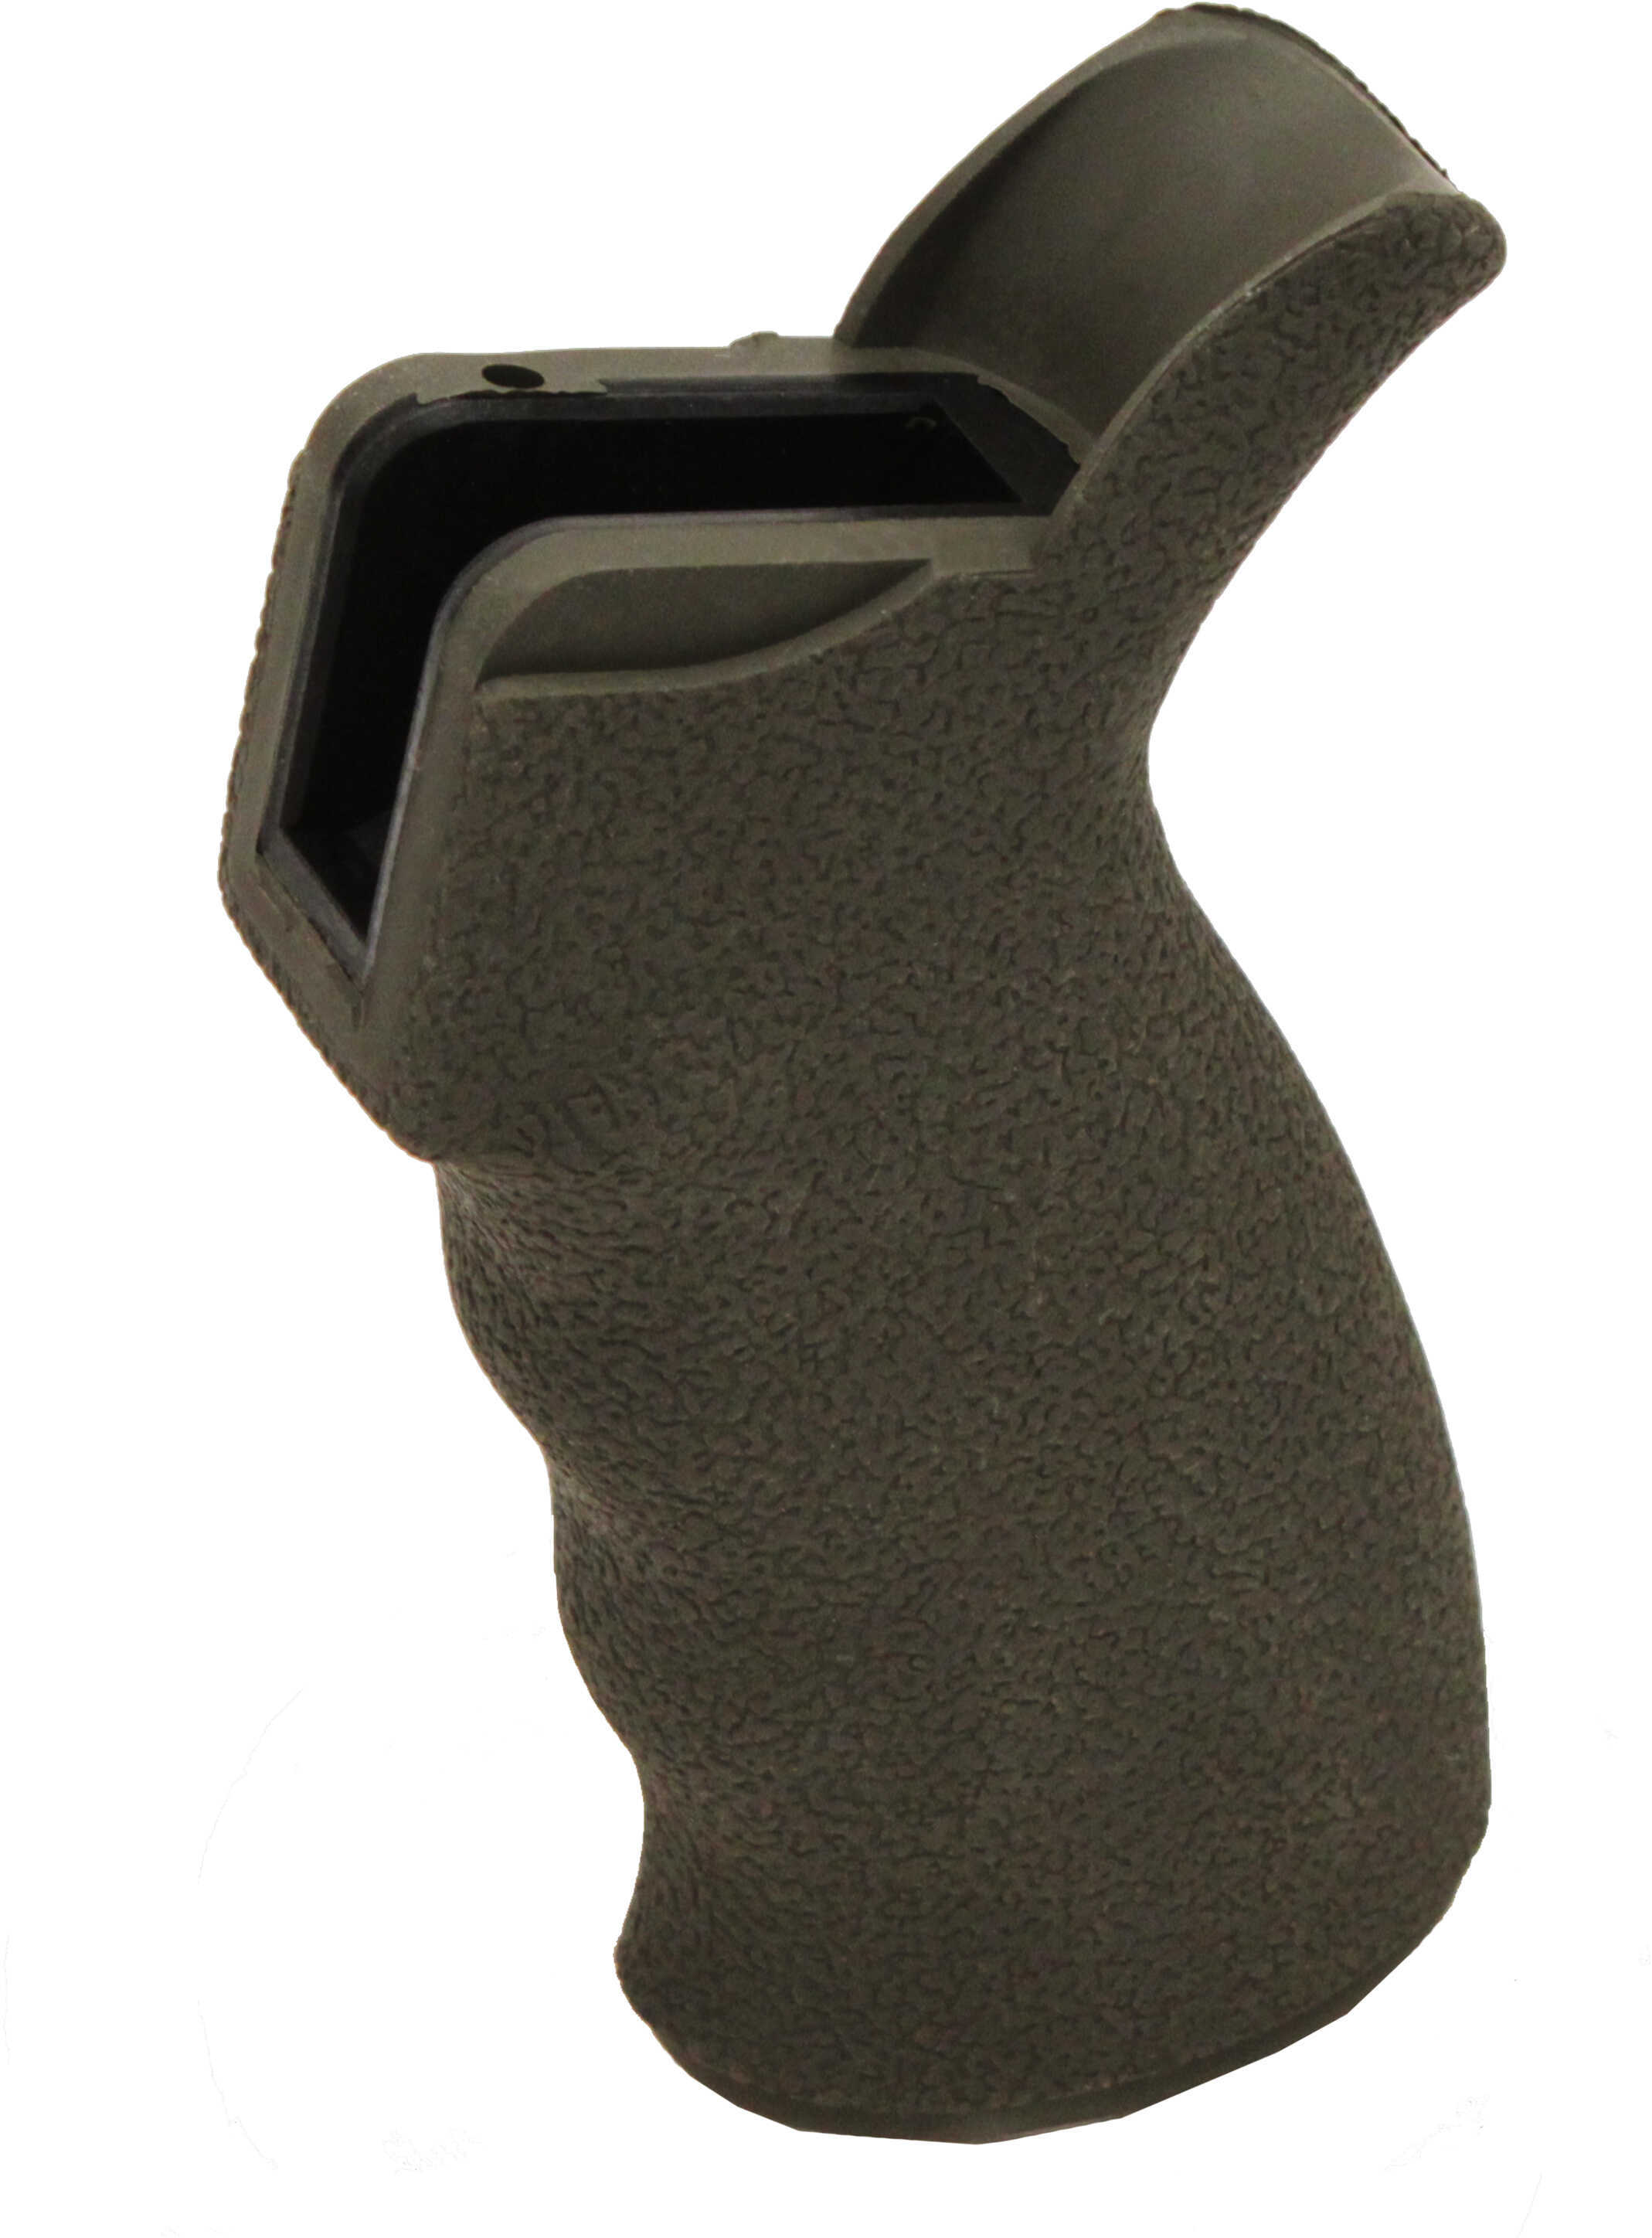 Ergo Hvy Texture AR/15M16 Grip Kit